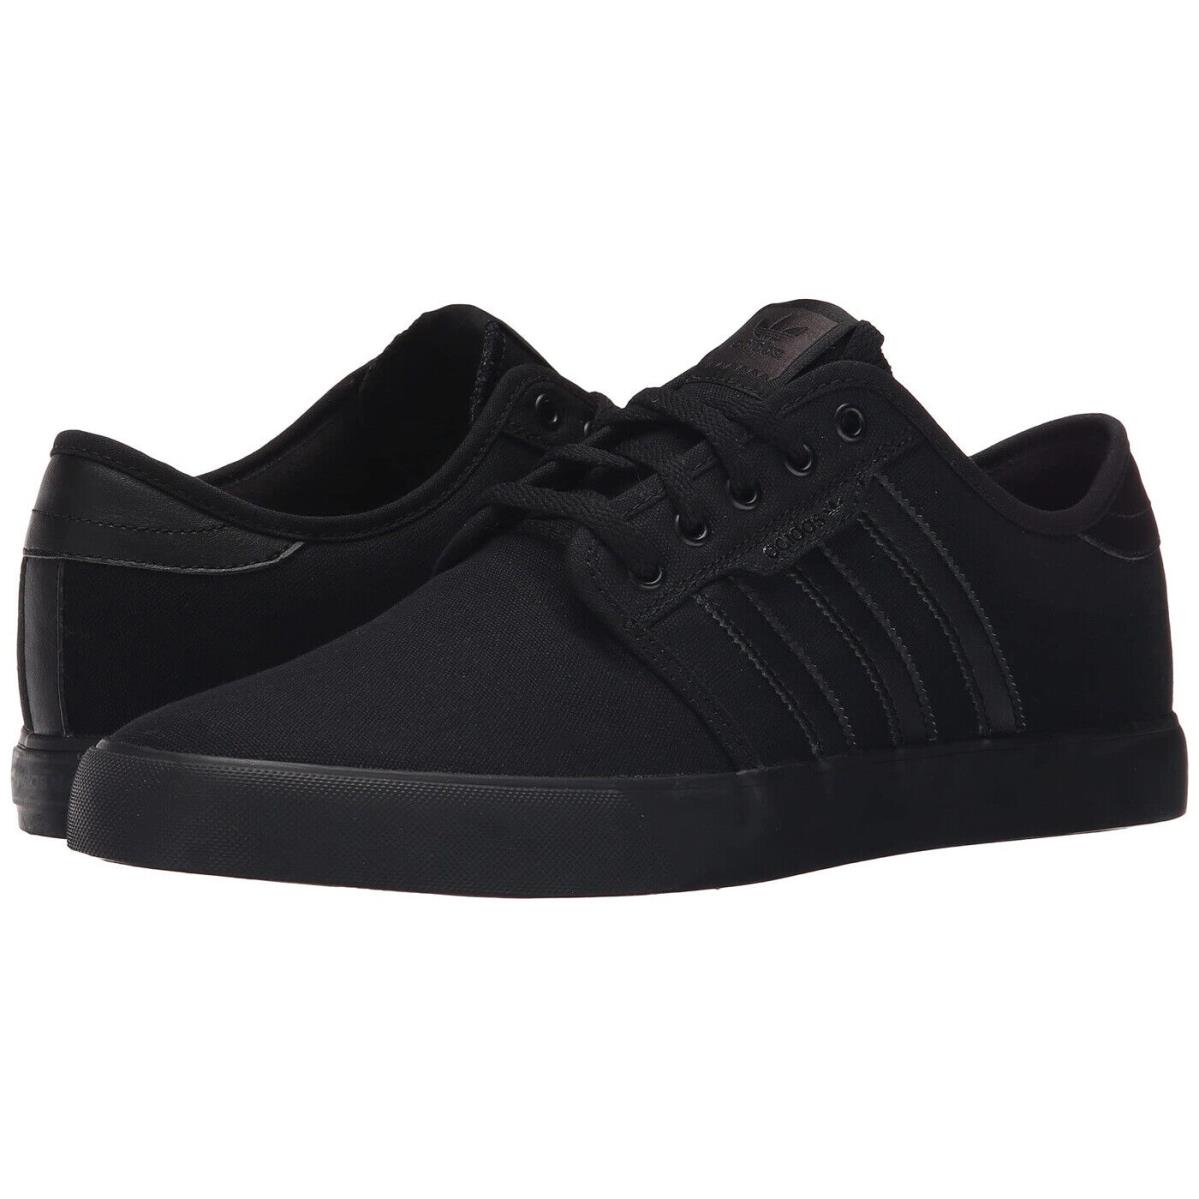 Adidas Seeley Canvas Black Black Men`s Skateboard Sneakers Shoes - Black